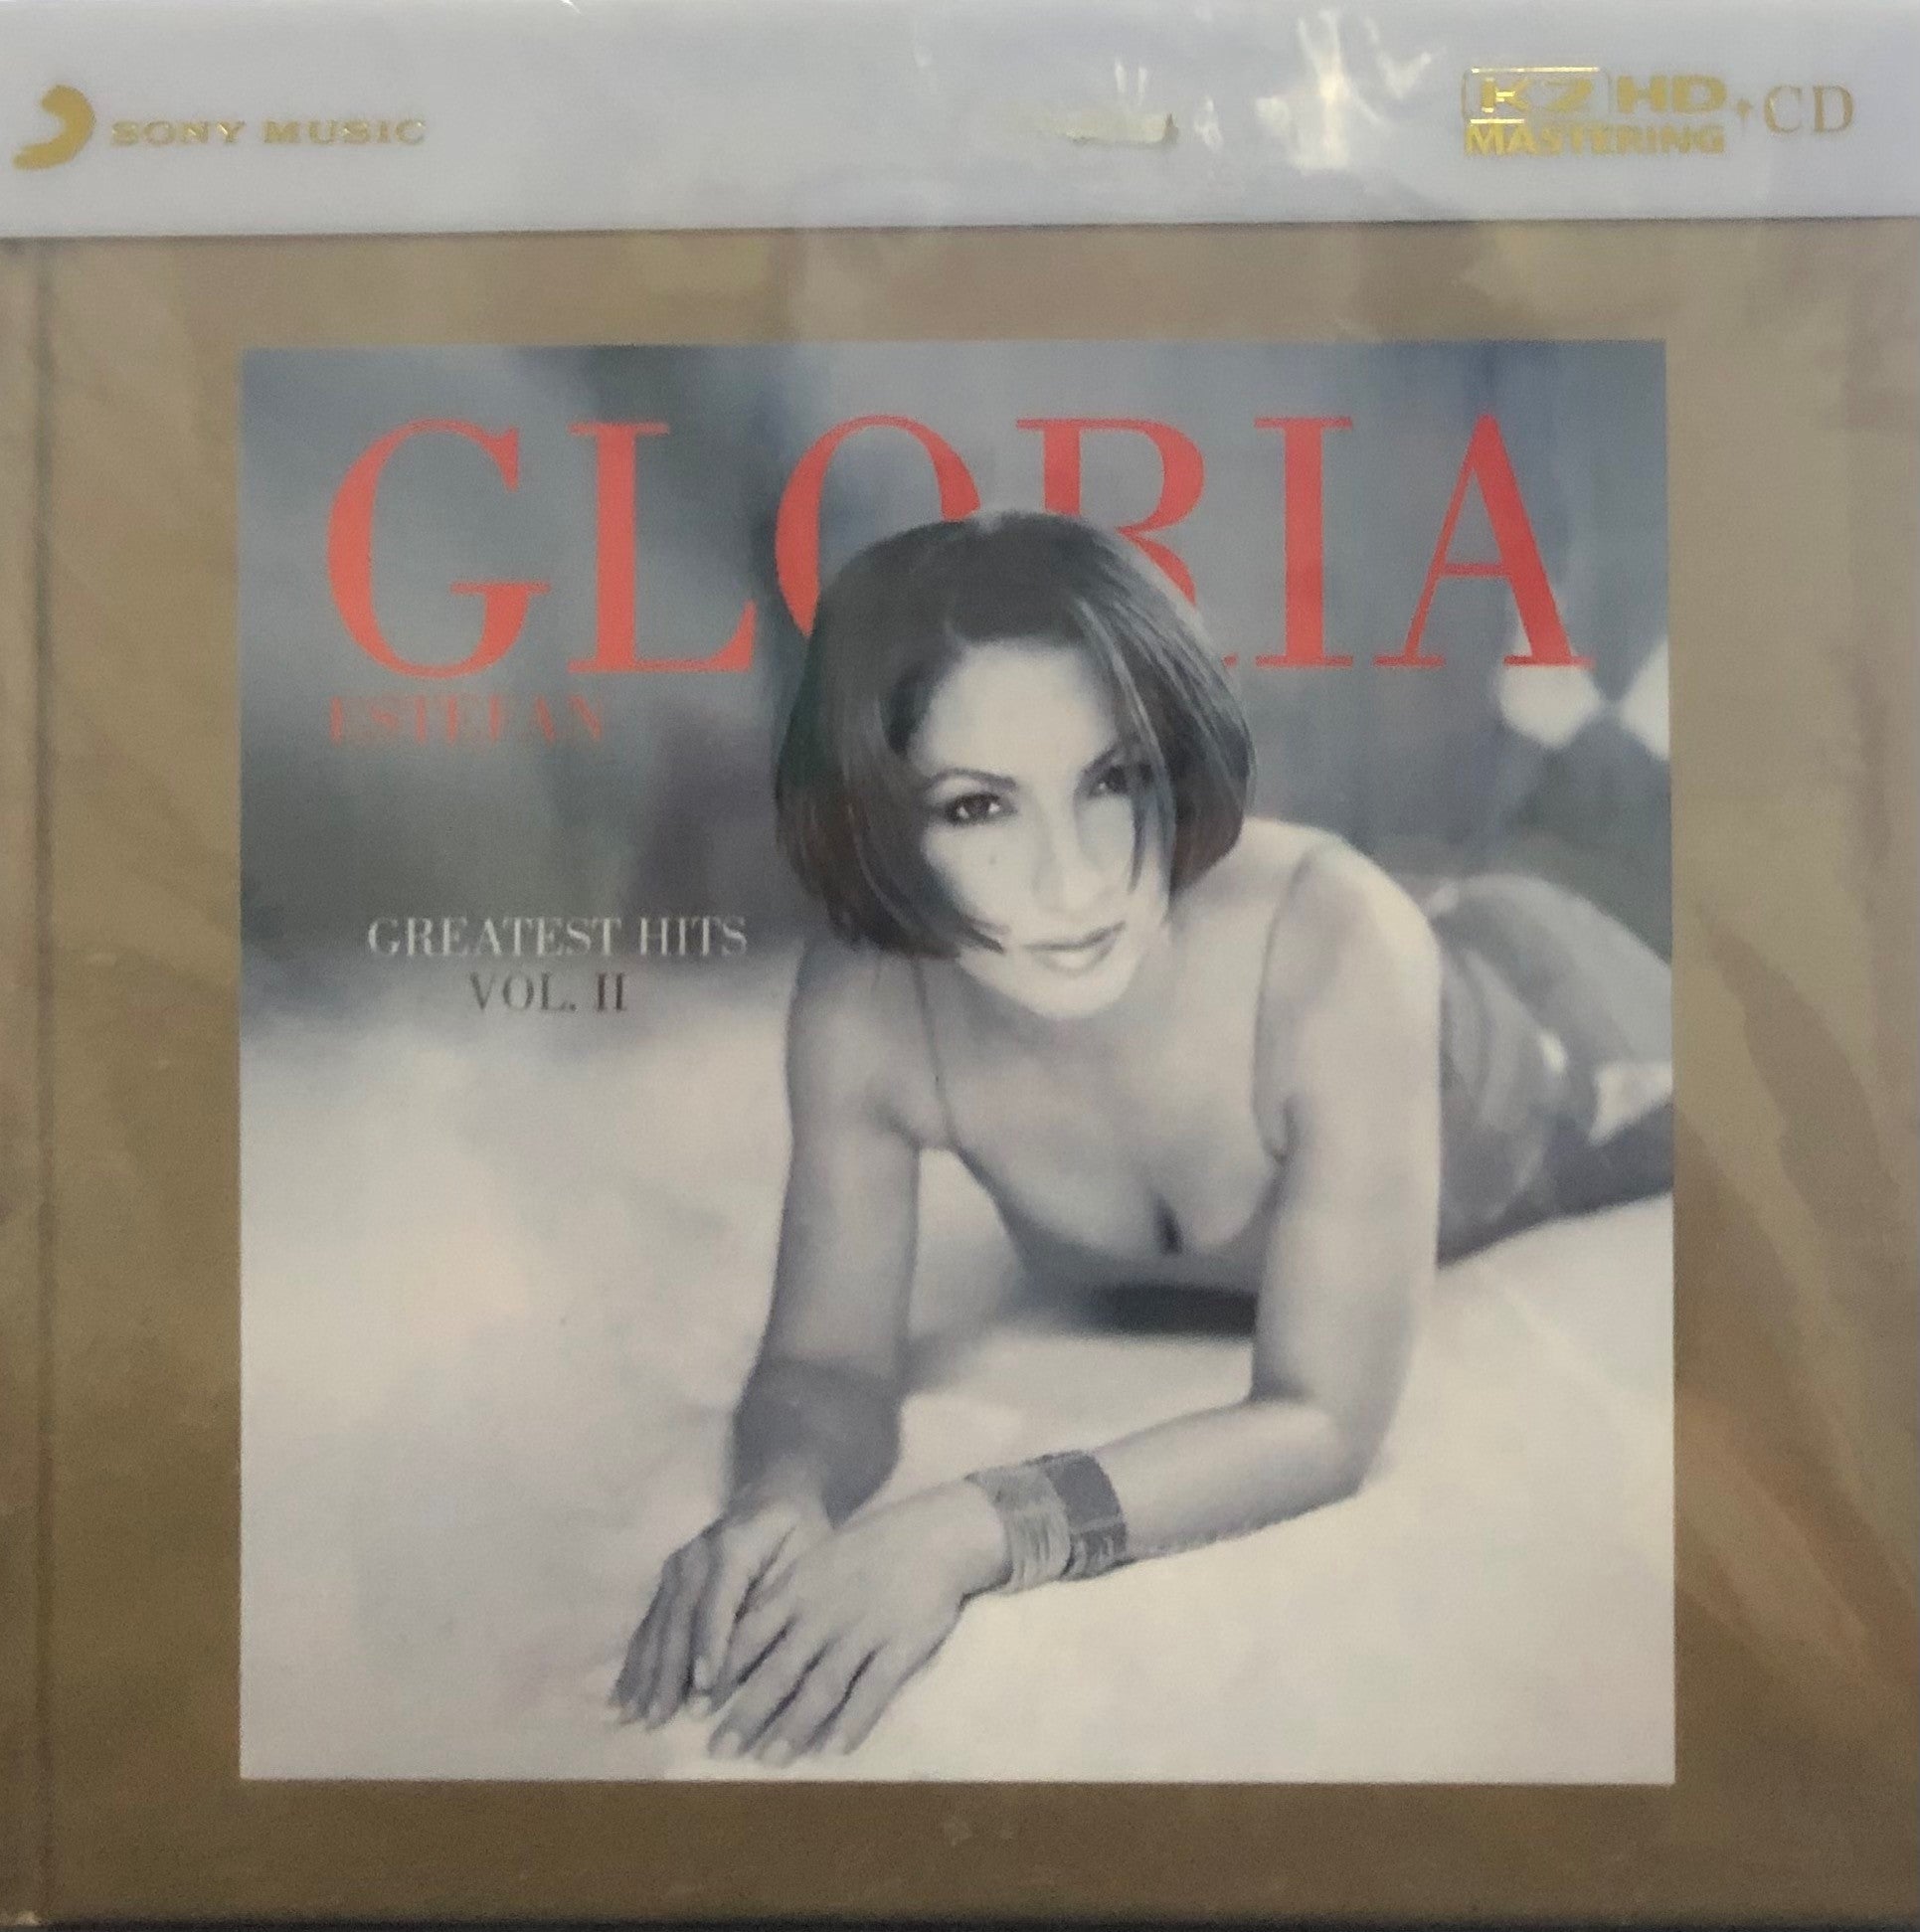 GLORIA ESTEFAN - GREATEST HITS VOL 2  (K2HD) CD MADE IN JAPAN